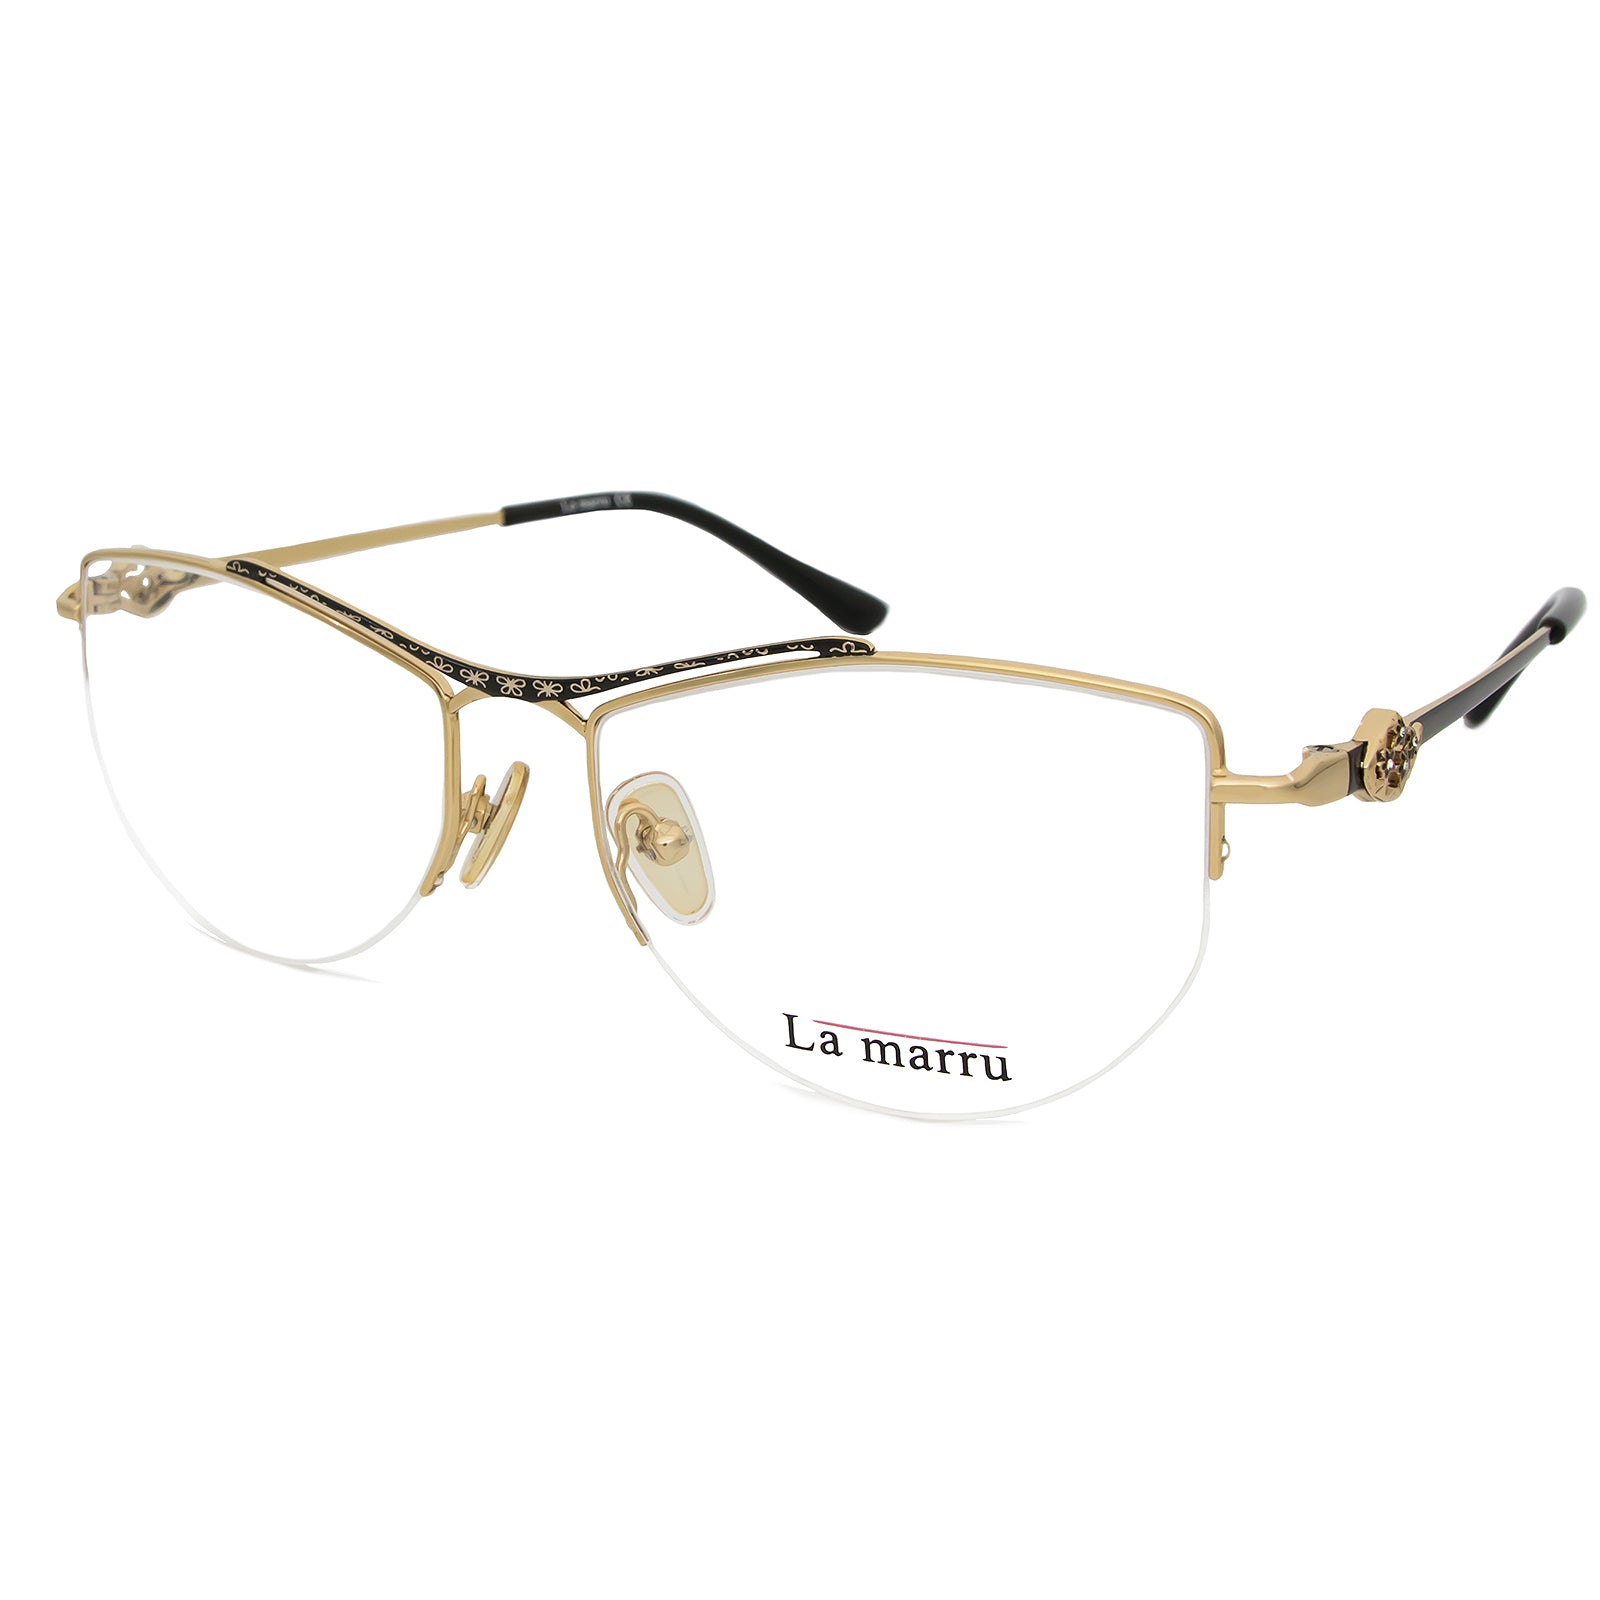 LaMarru by Eva Minge LAP 4002 C1 oprawki okularowe